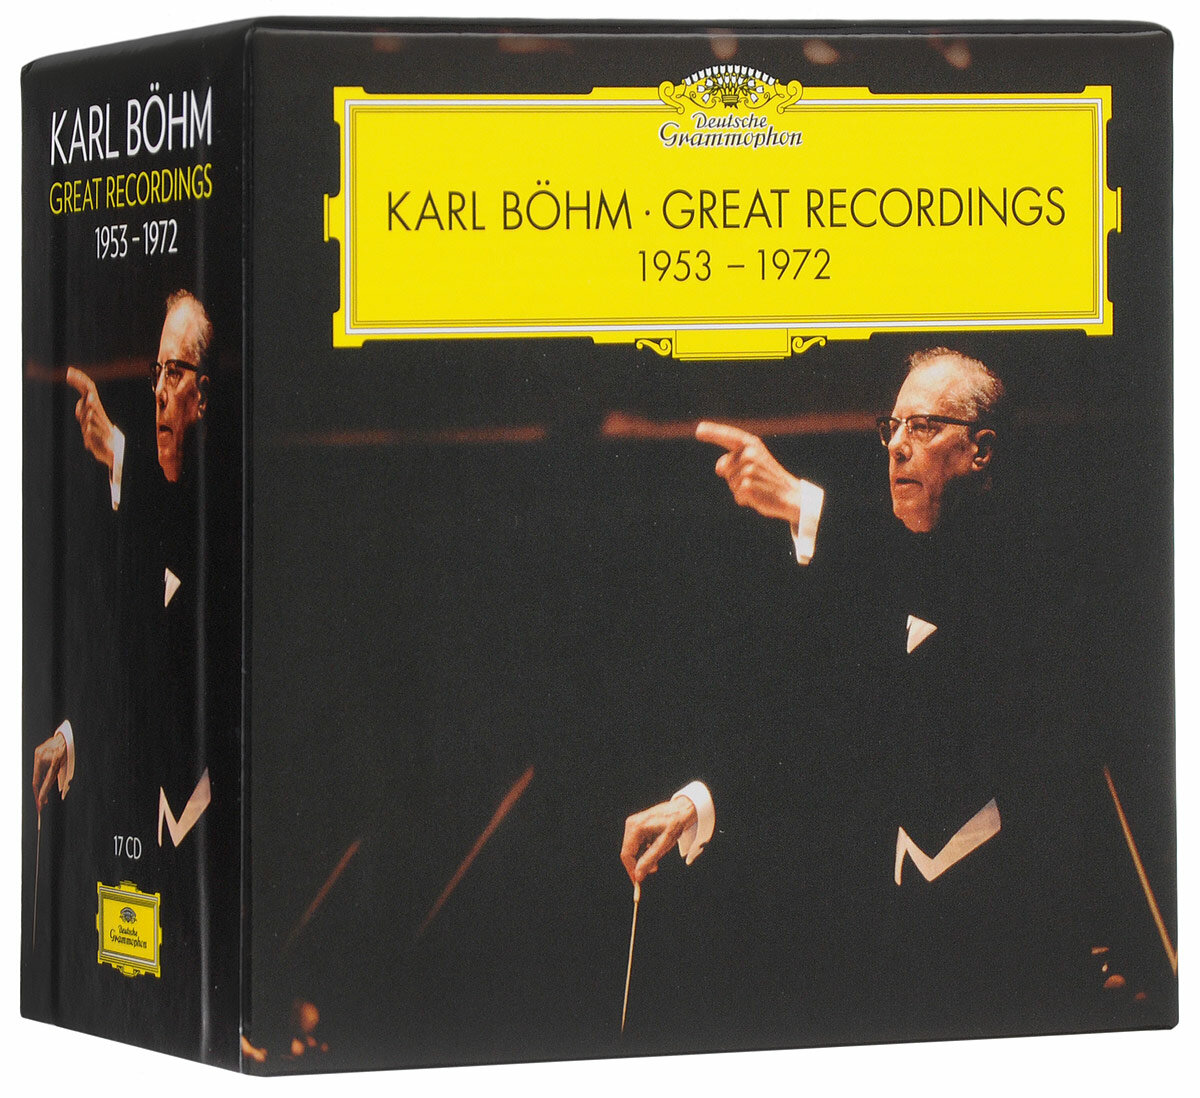 AUDIO CD великие записи Karl Bohm! Great Recordings 1953-1972 (17 CD)17 компакт-дисков